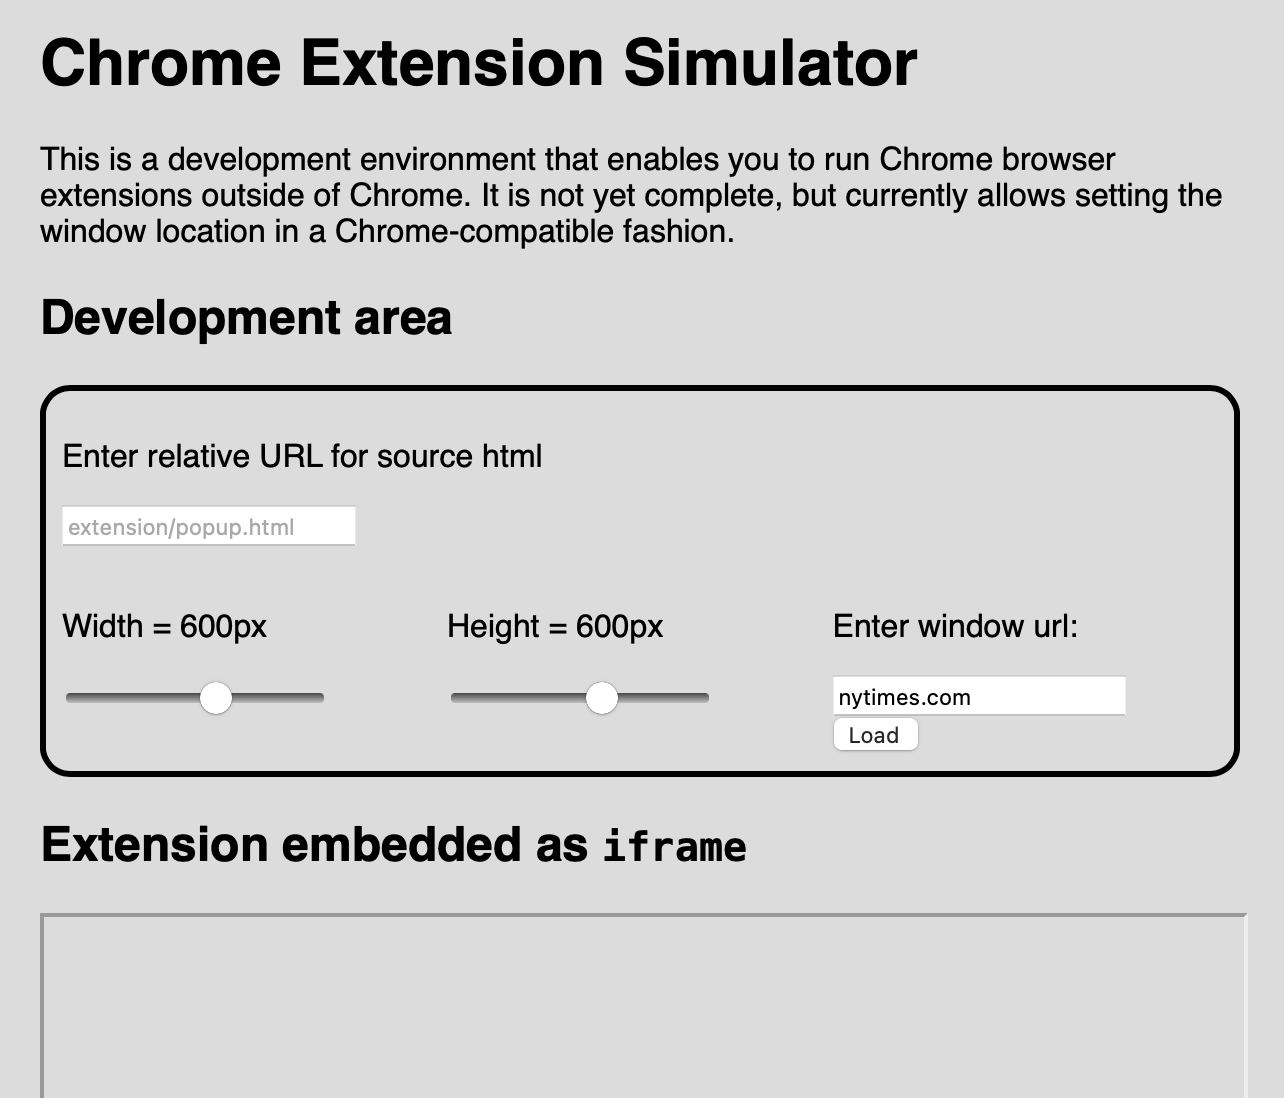 The chrome extension simulator debugging environment